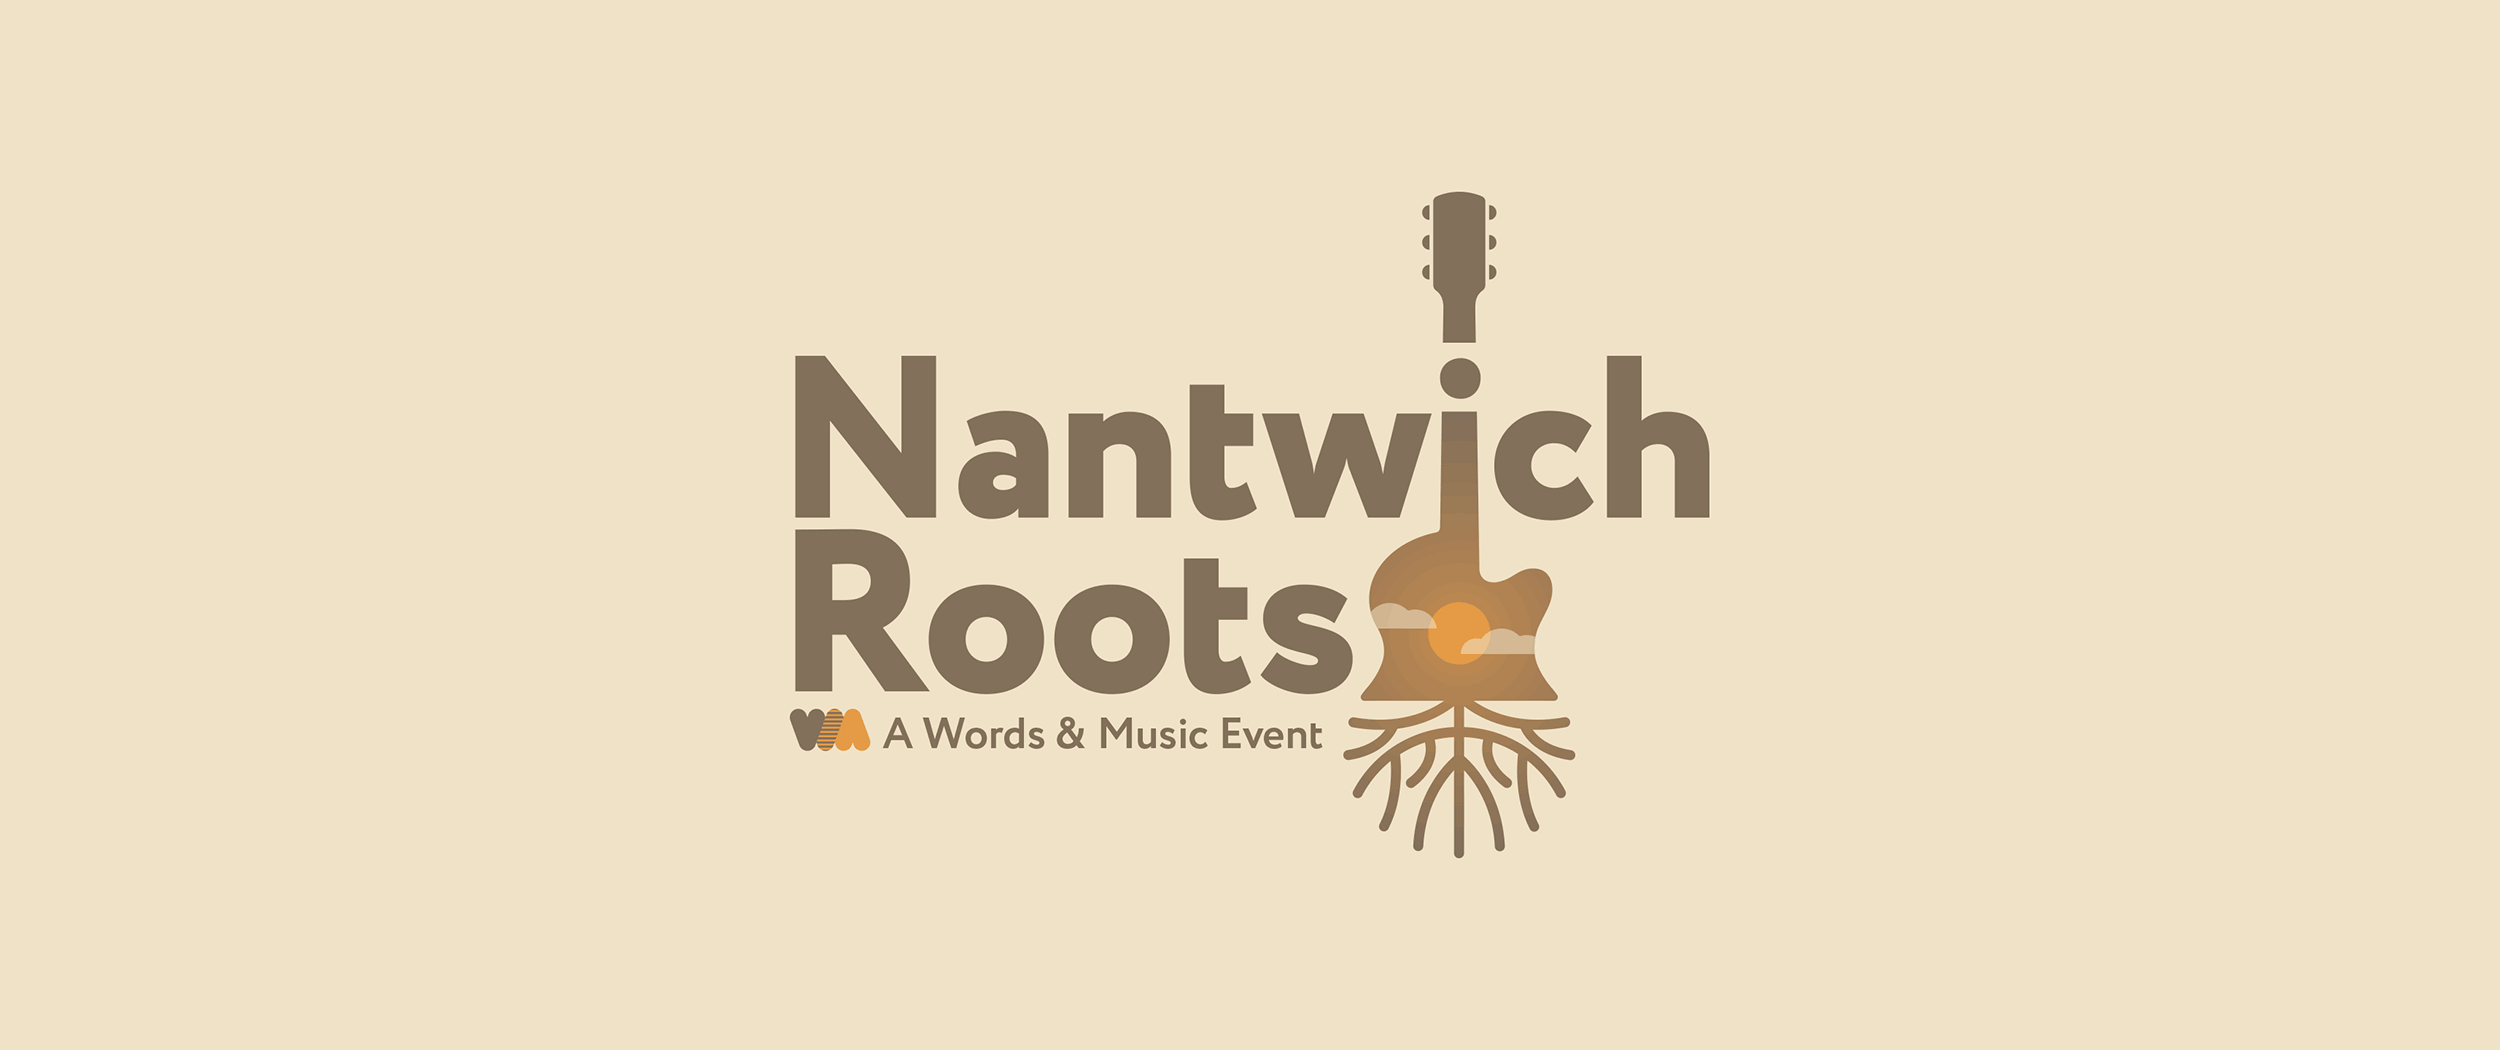 Nantwich Roots Festival Logo Design